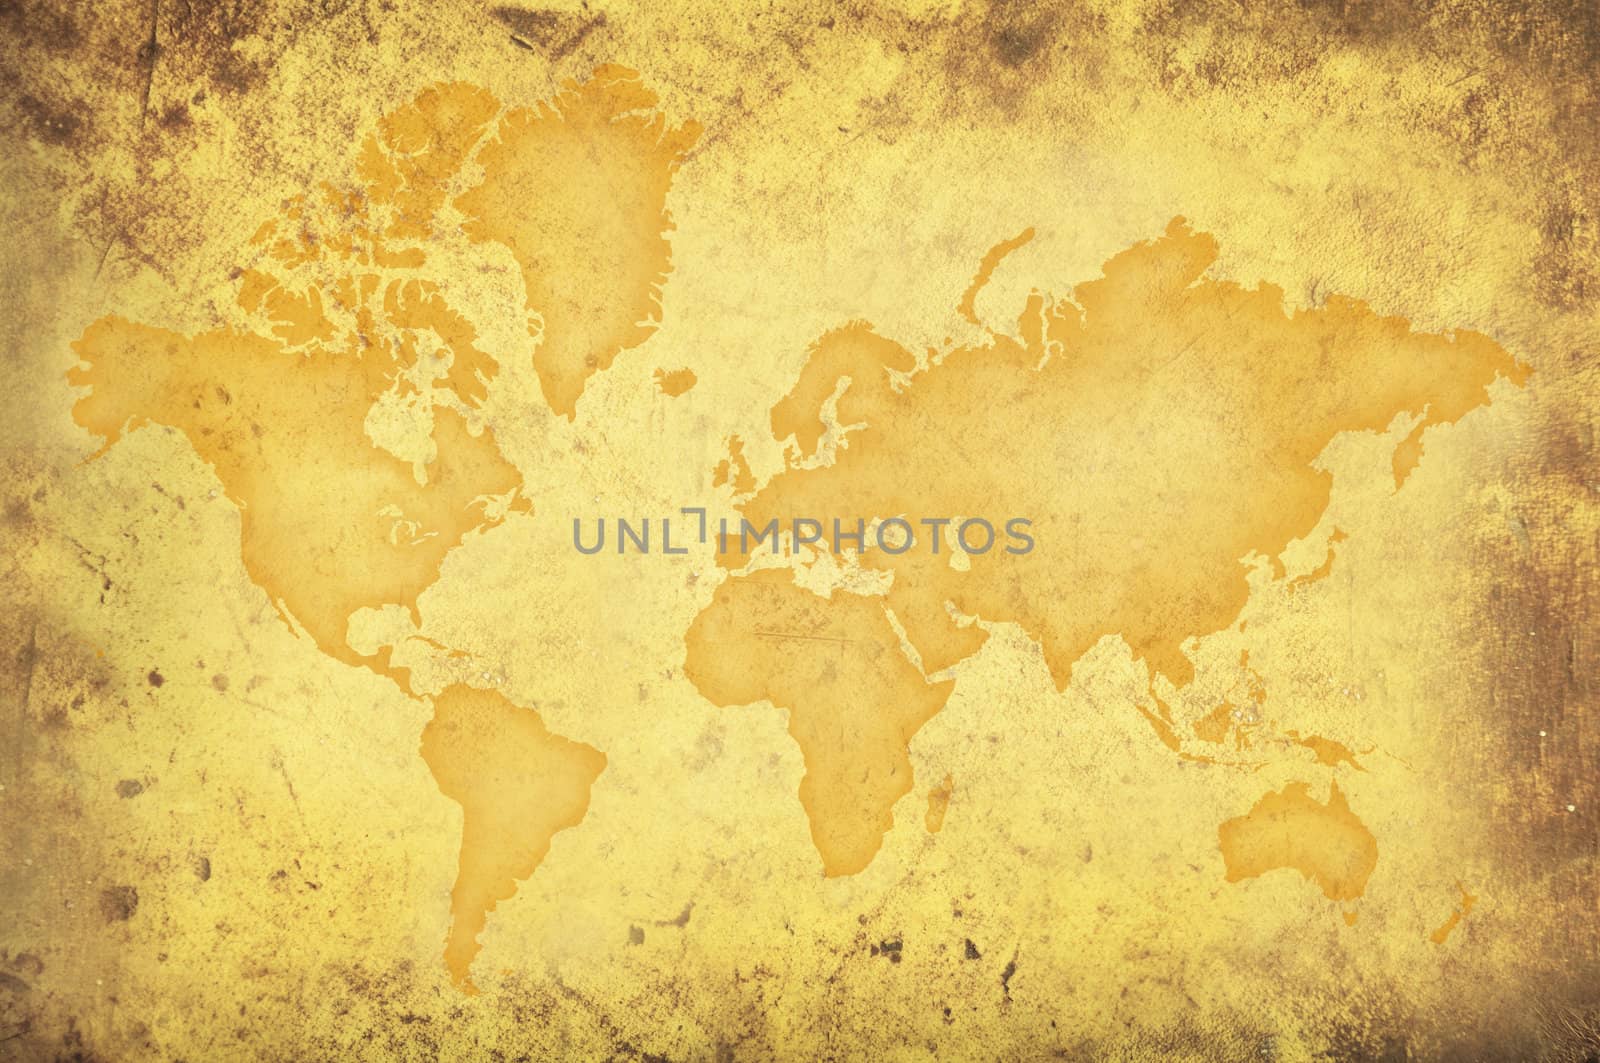 Grungy yellow international map of the world